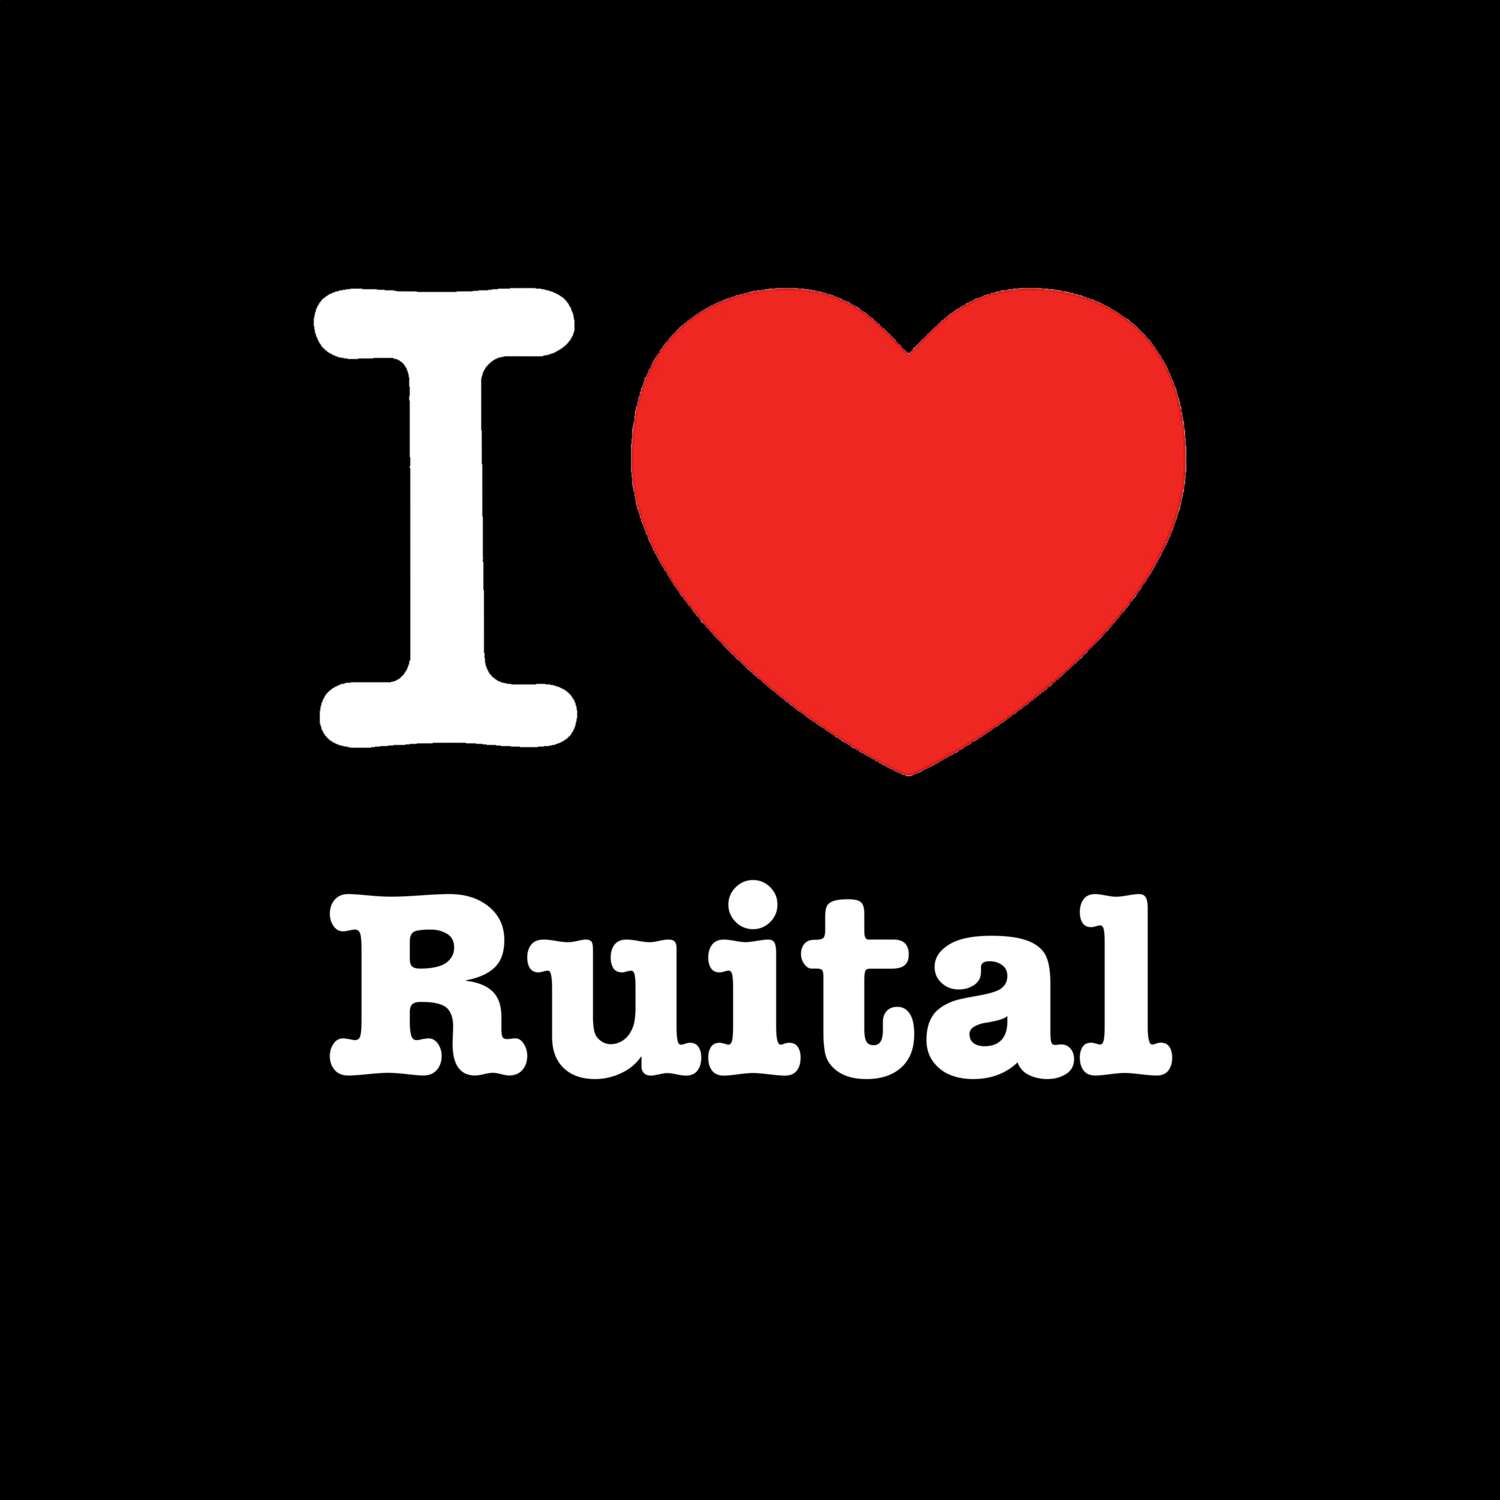 Ruital T-Shirt »I love«